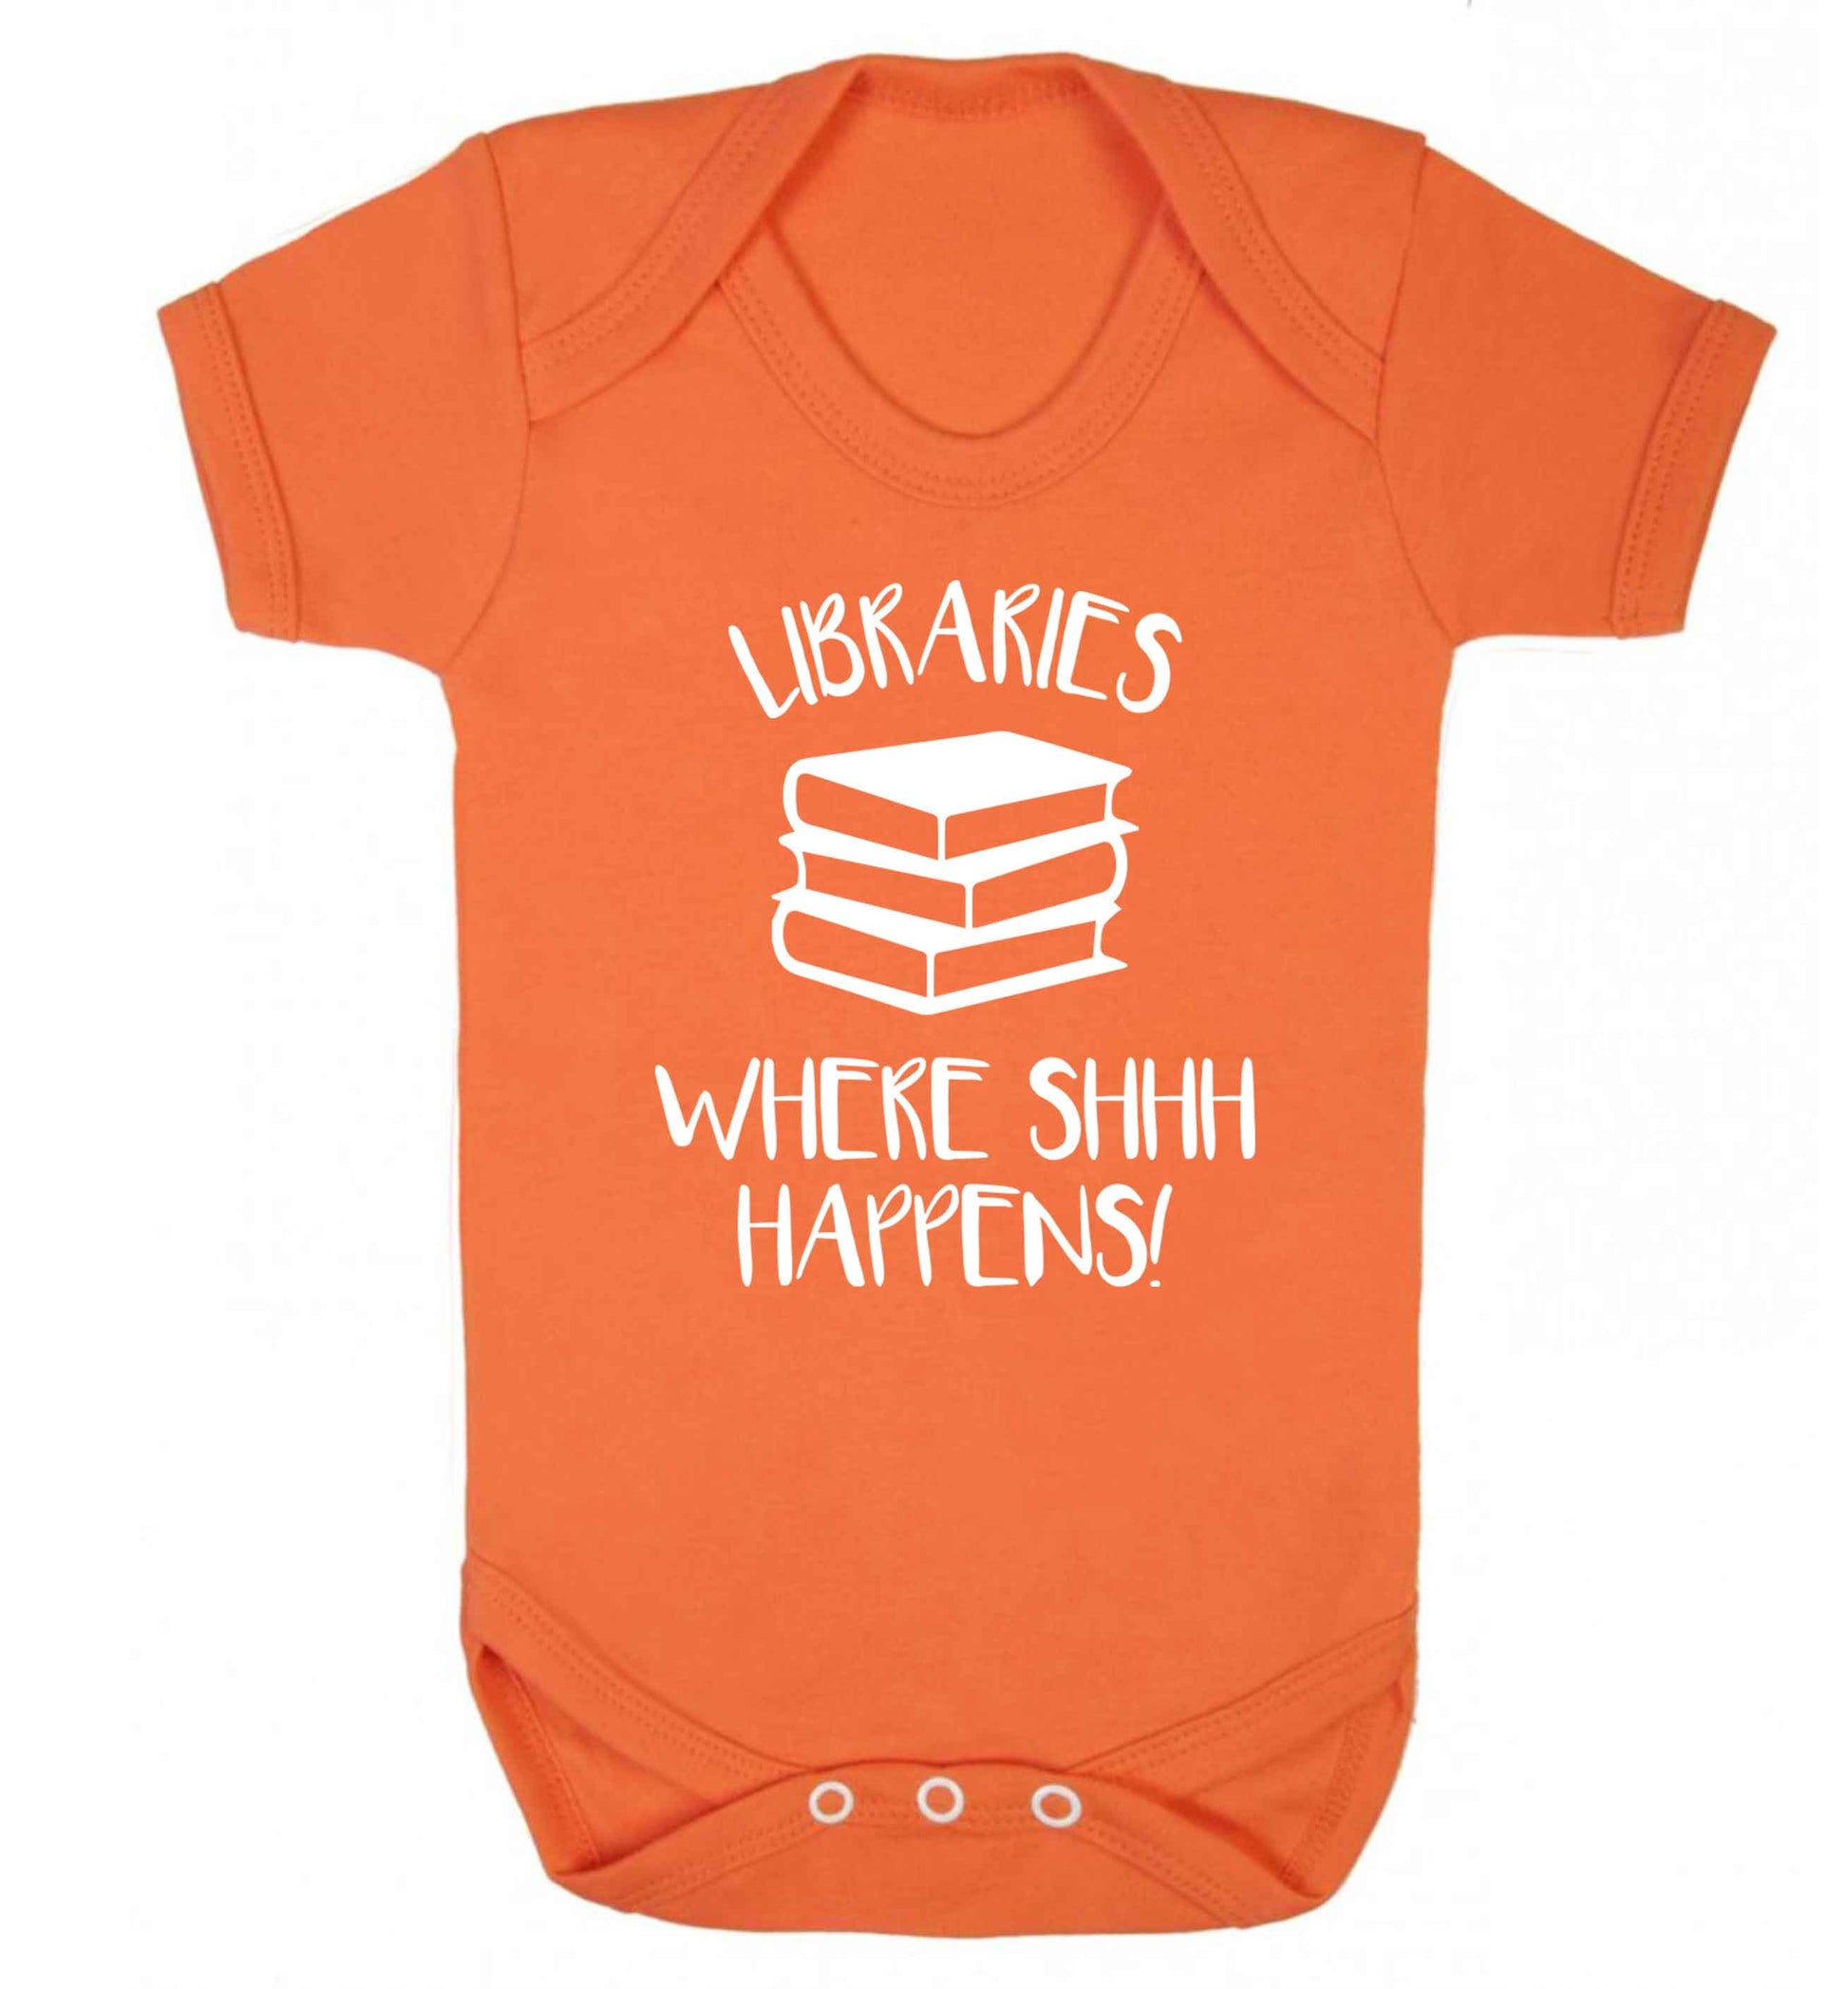 Libraries where shh happens! Baby Vest orange 18-24 months